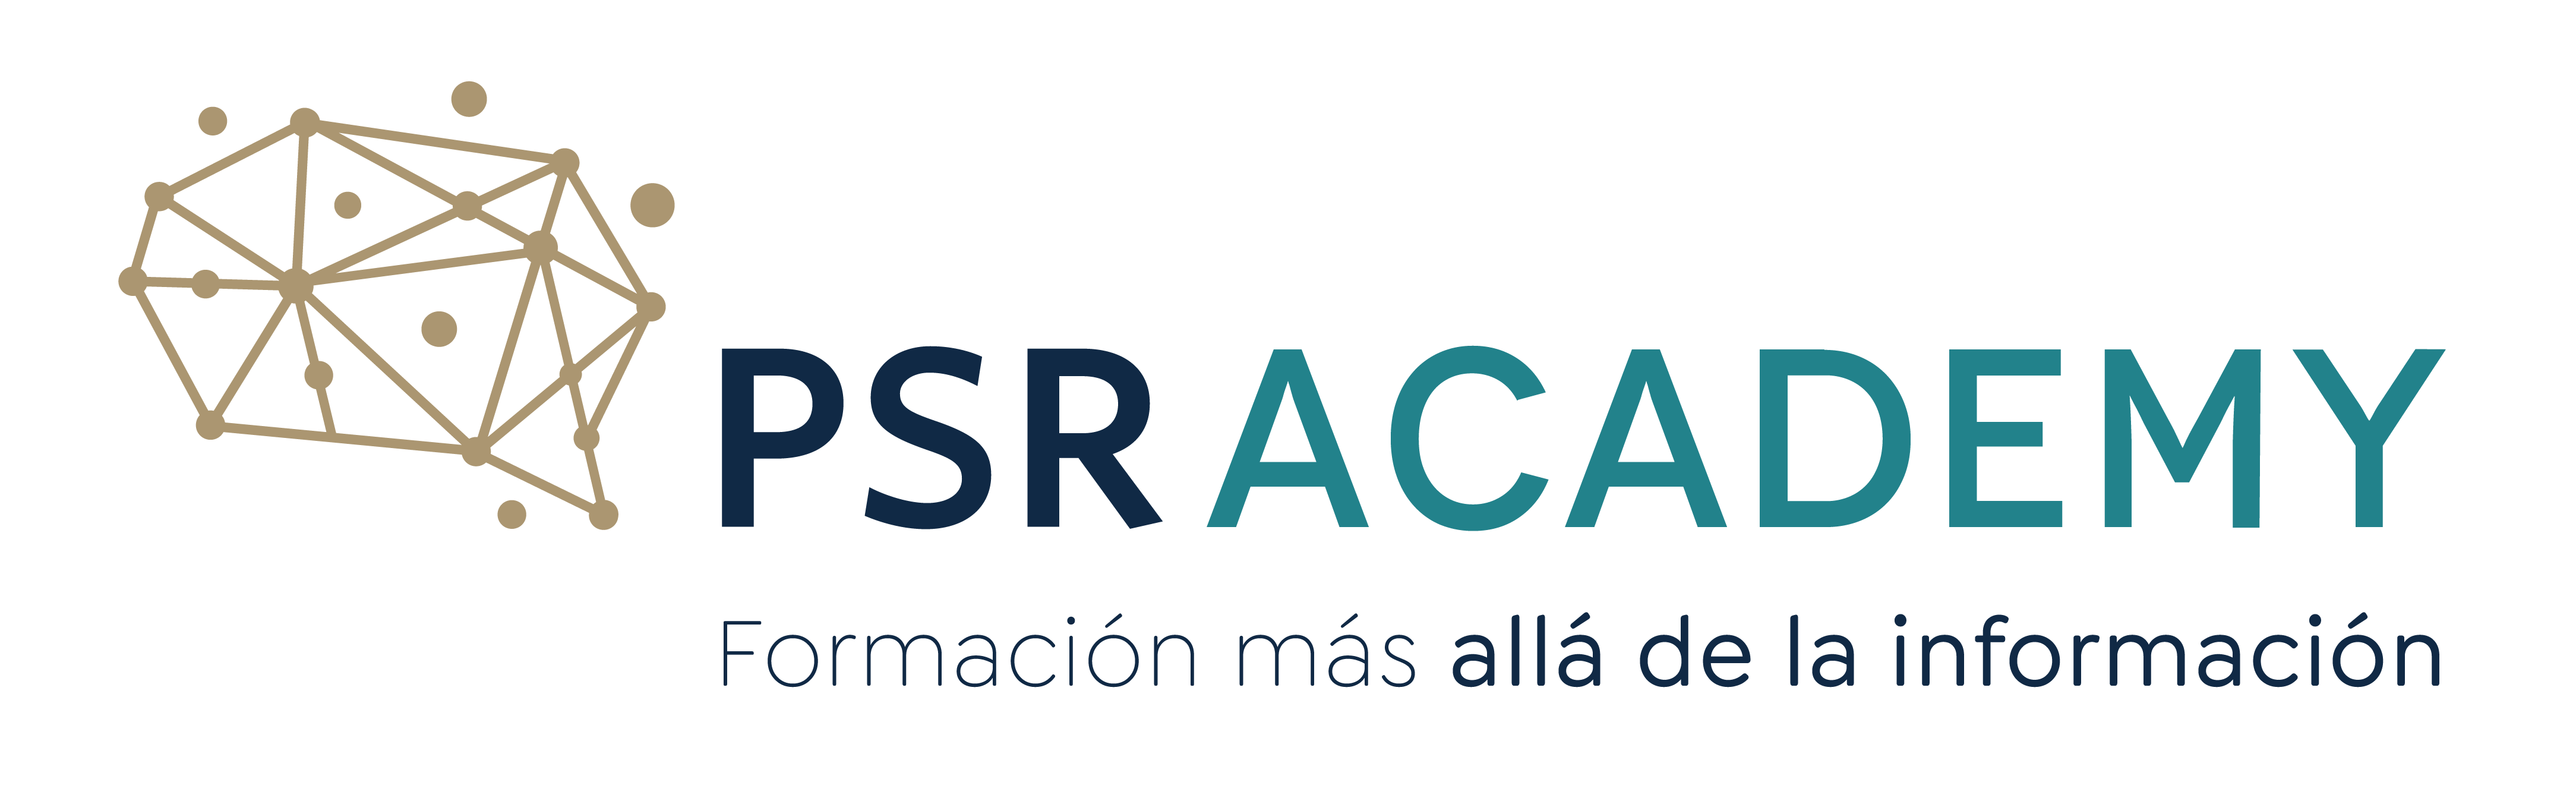 logo-psr-academy-slogan-esp-transp.png